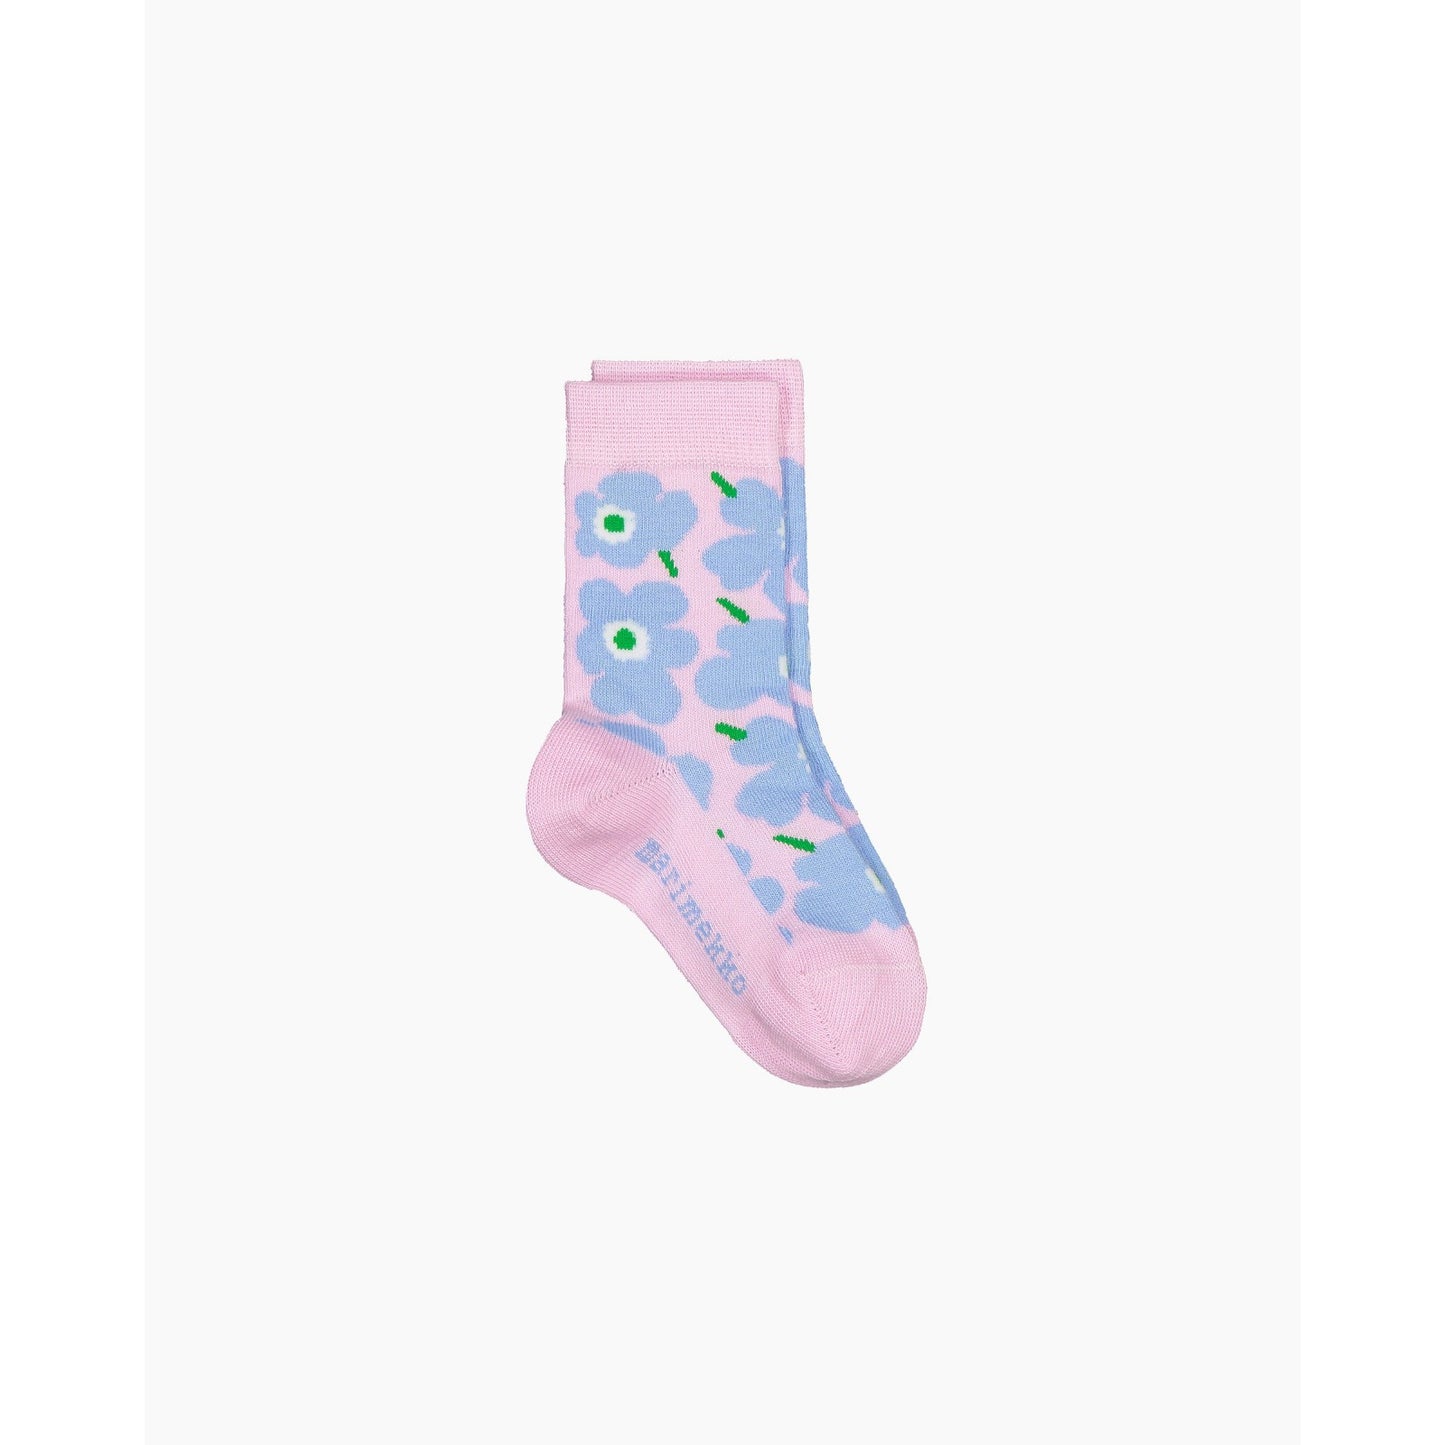 Umika children’s Socks - pink, green and blue